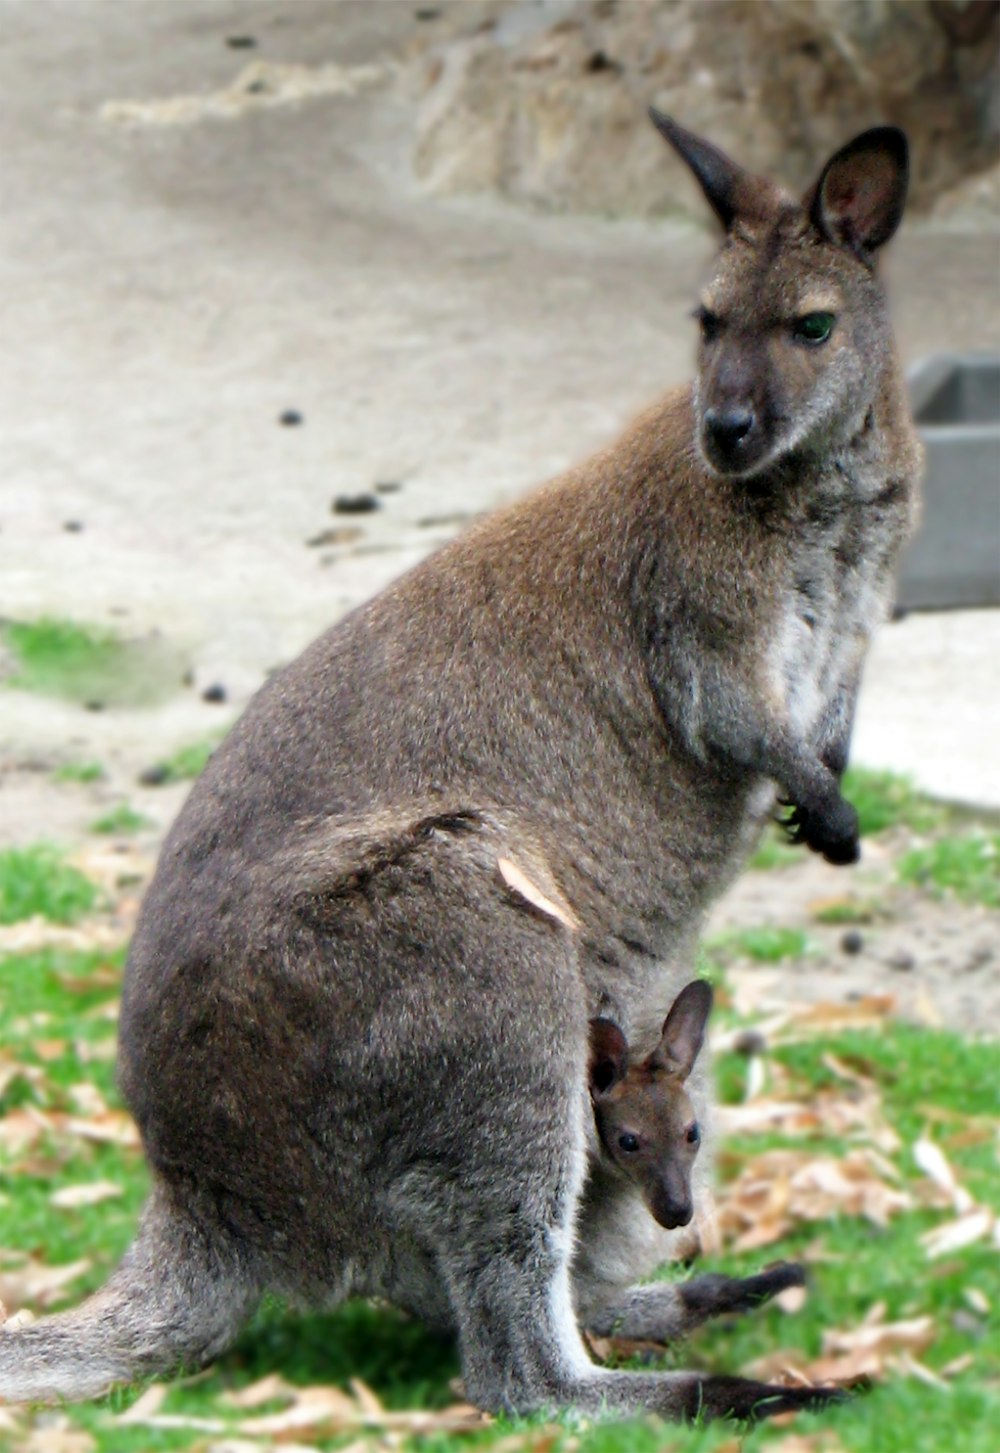 a kangaroo and a baby kangaroo in a grassy area